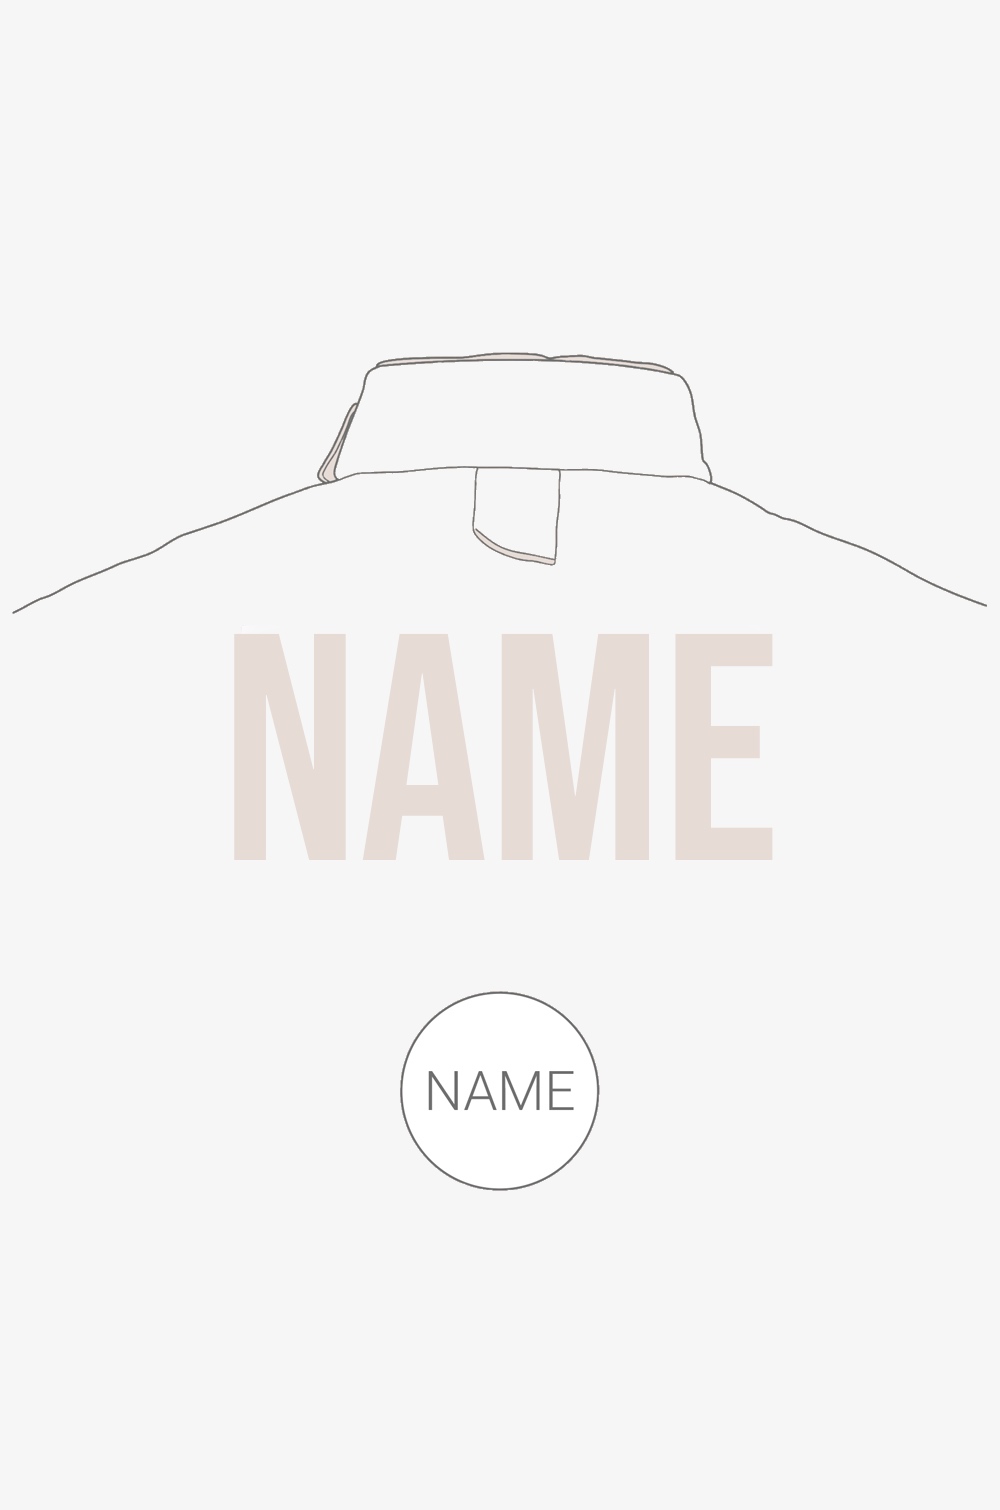 Name Printing on Electric Jacket Inox (transfer printing)